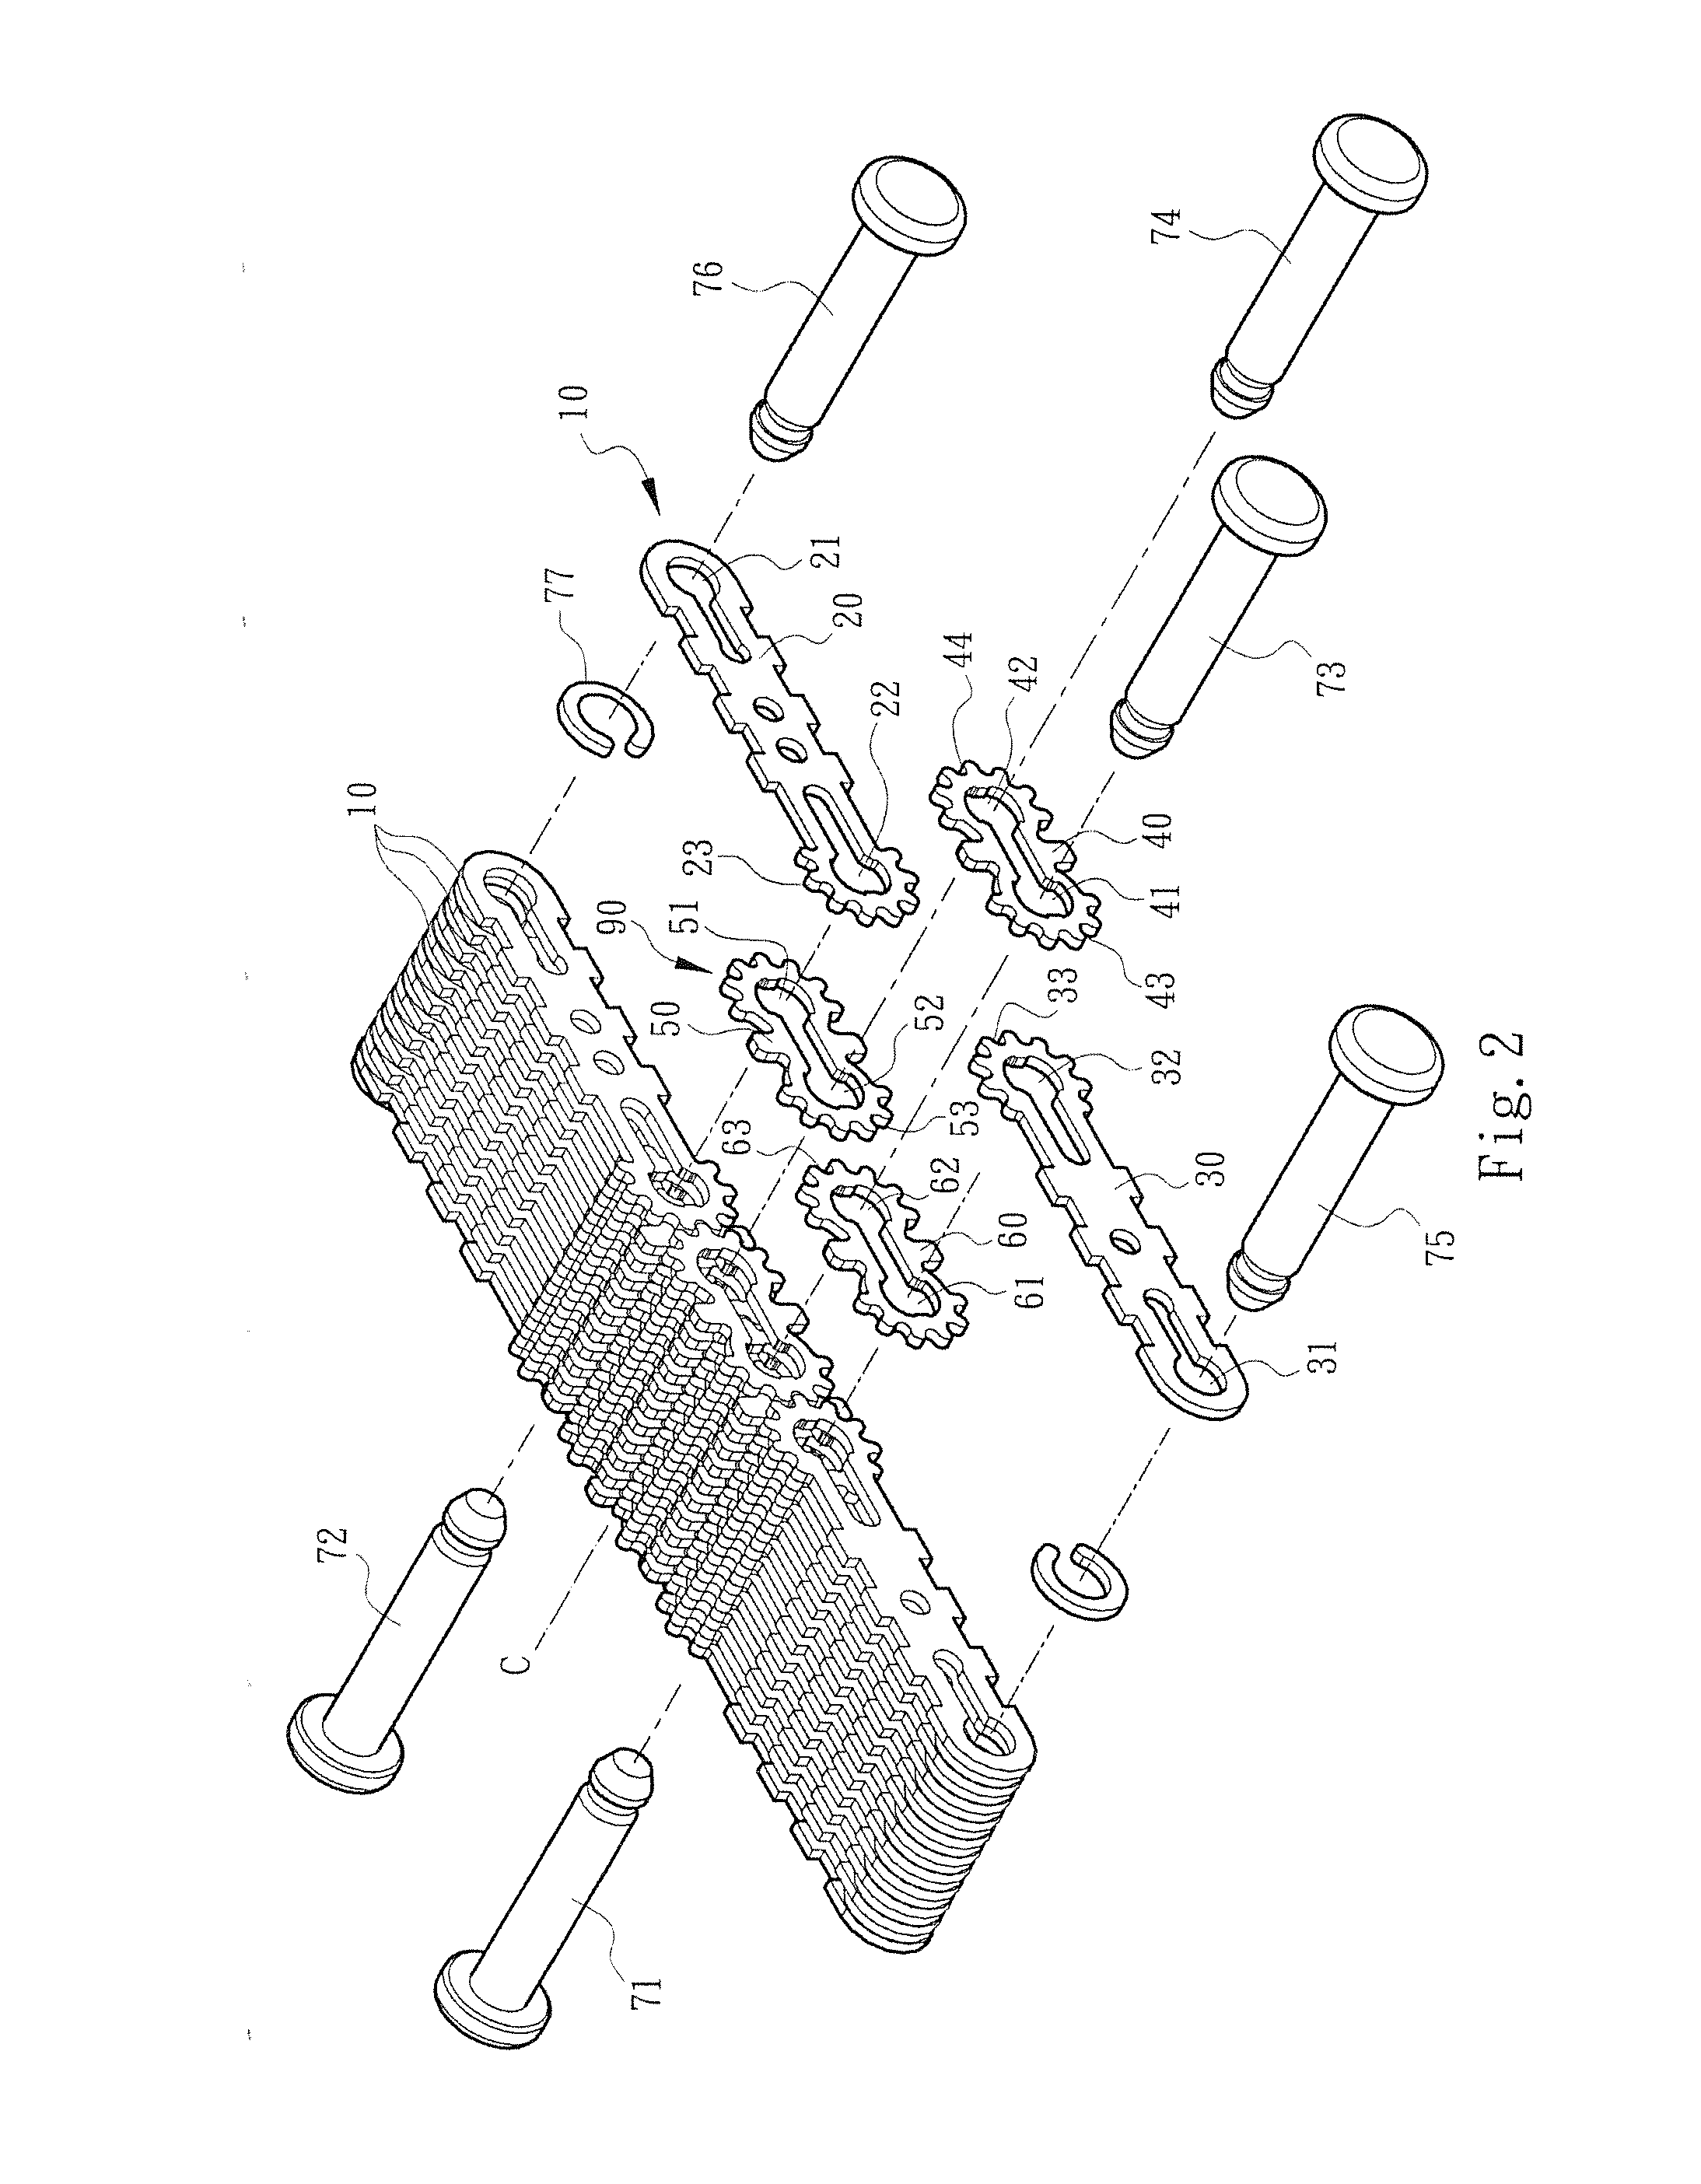 Multi-segment rotary shaft structure